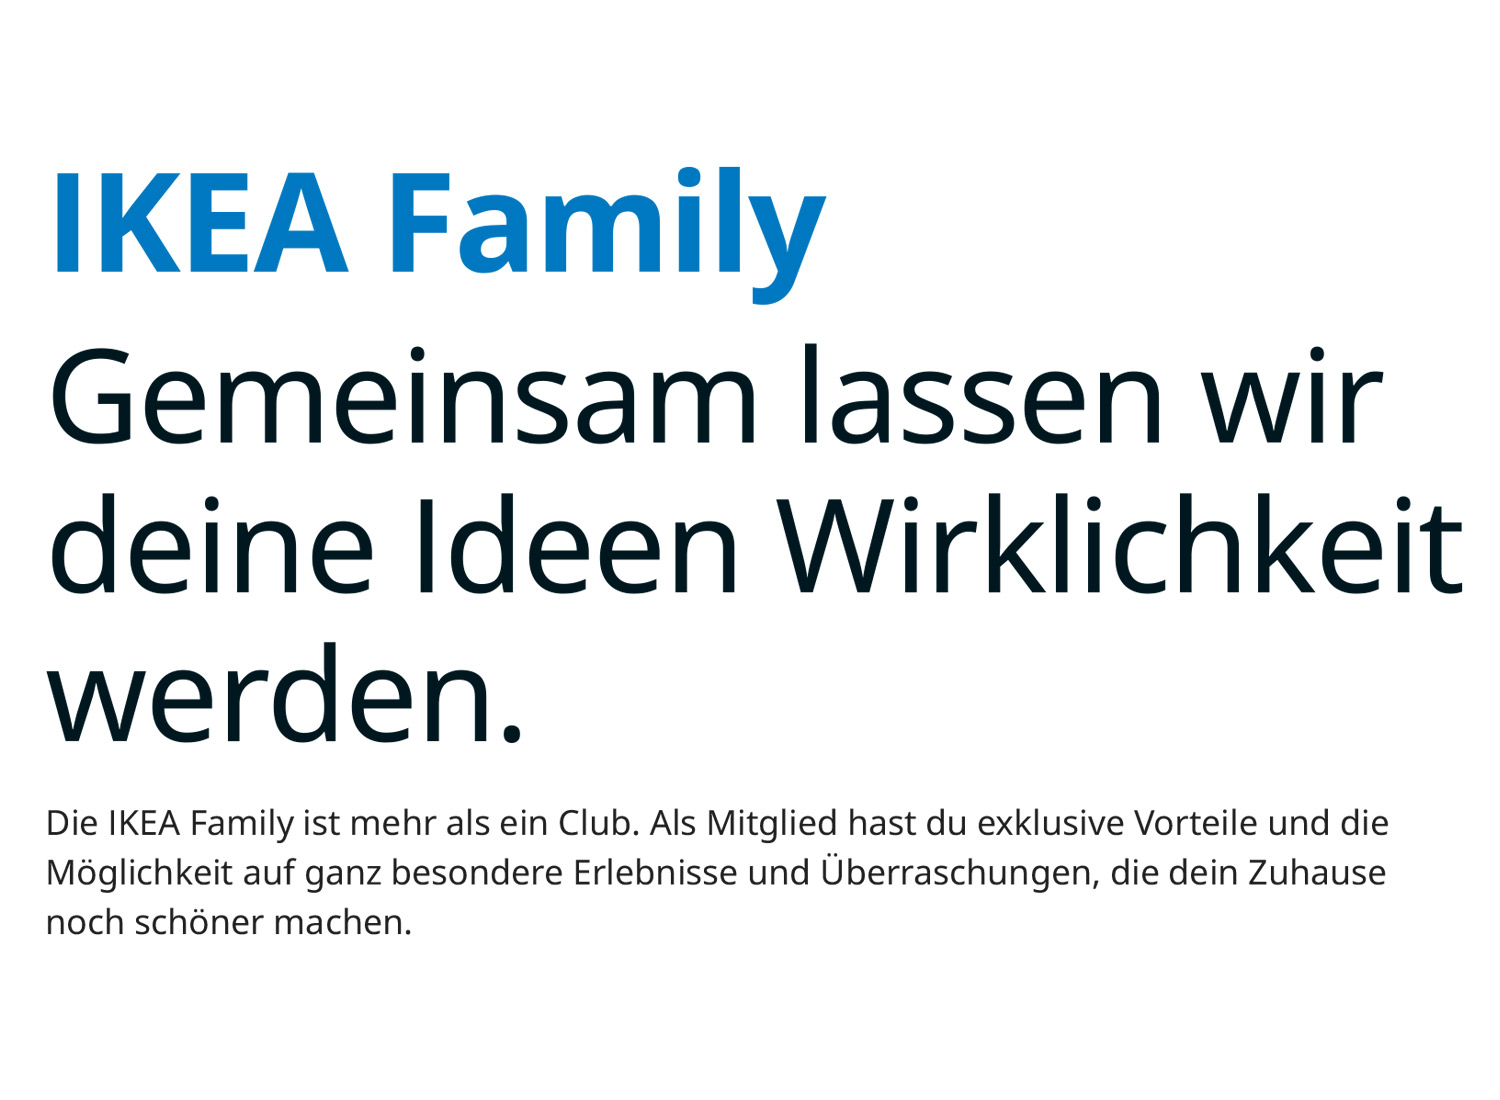 IKEA Katalog 2020 – Family, Quelle: IKEA